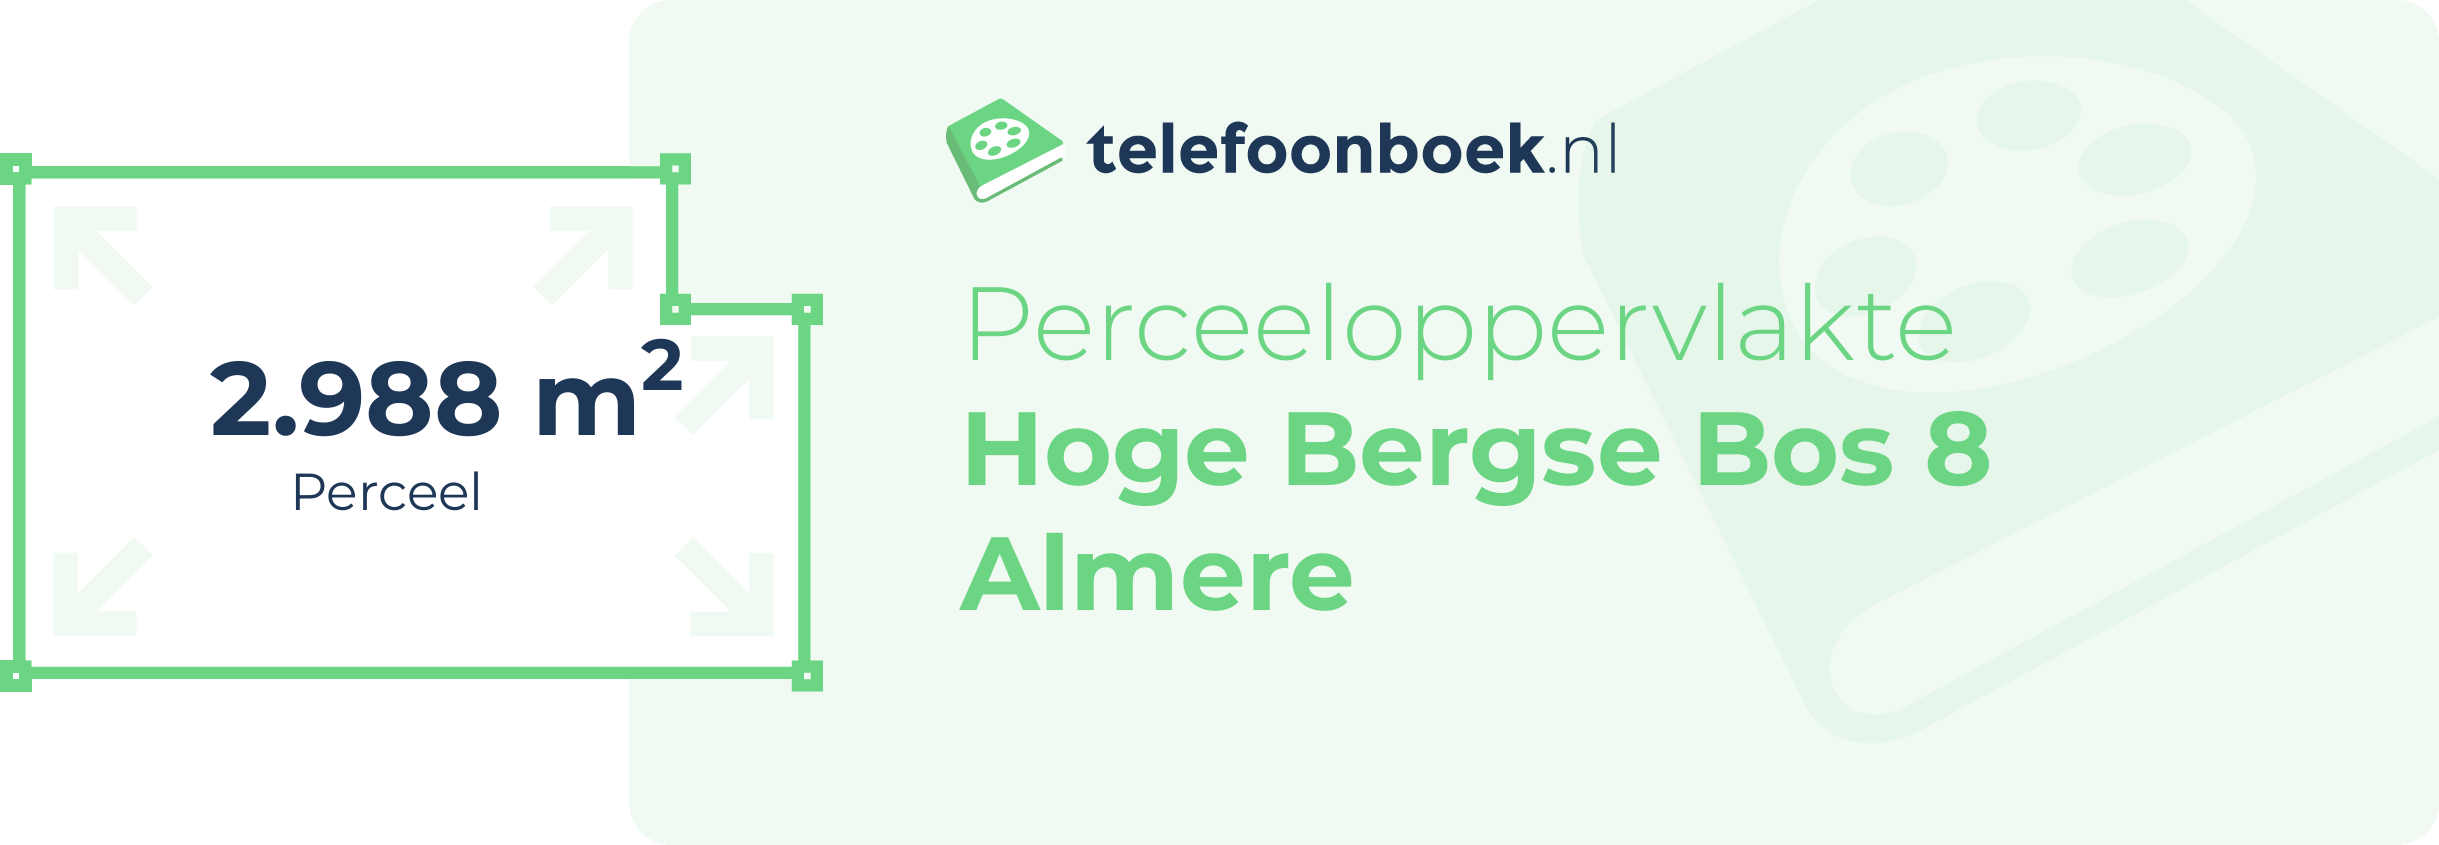 Perceeloppervlakte Hoge Bergse Bos 8 Almere